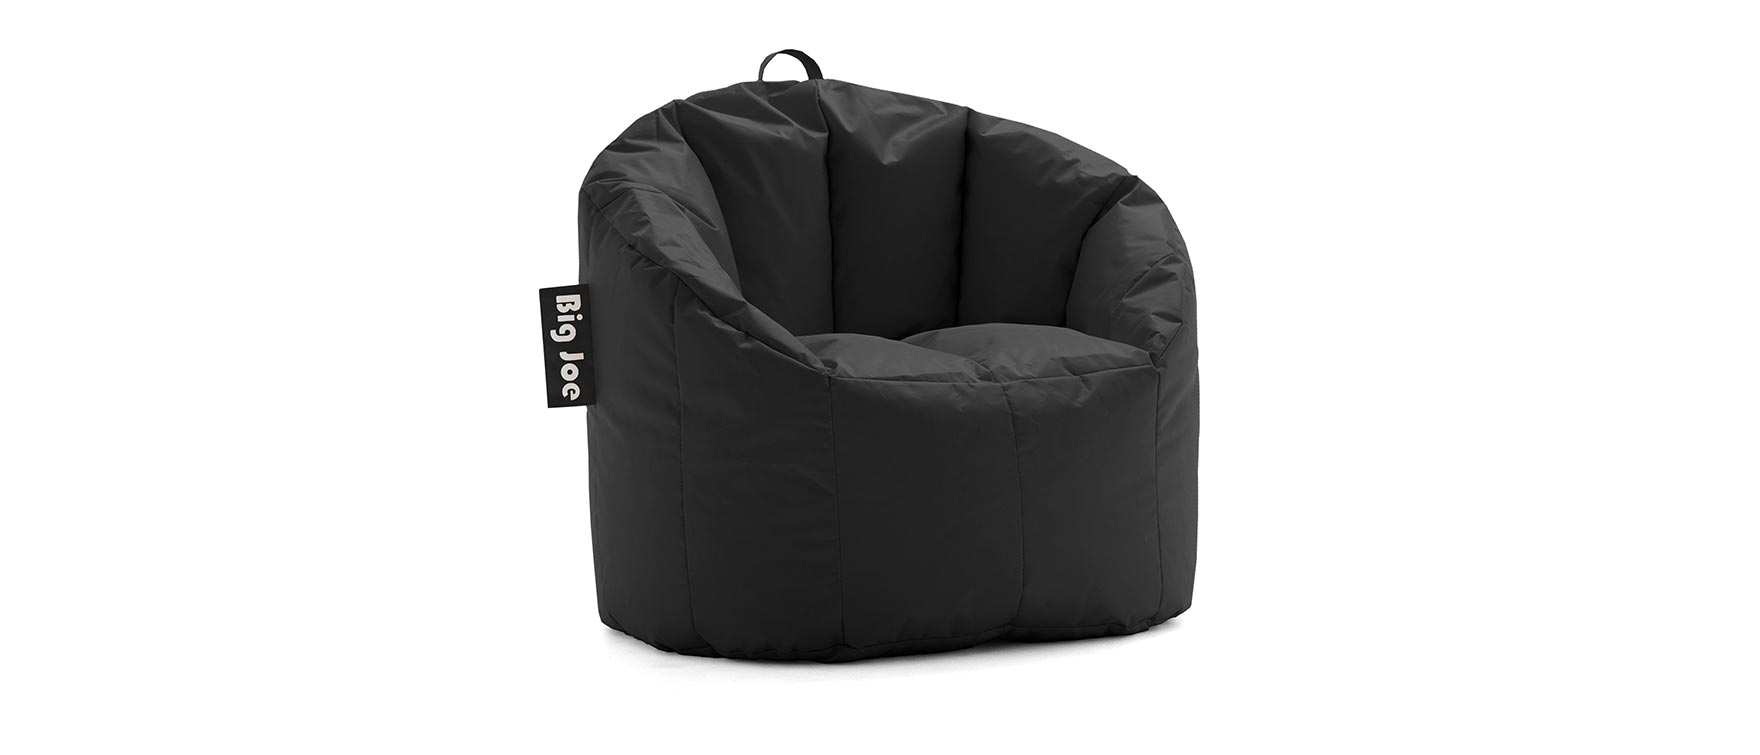 3. Best Budget: Big Joe Milano Standard Bean Bag Chair & Lounge